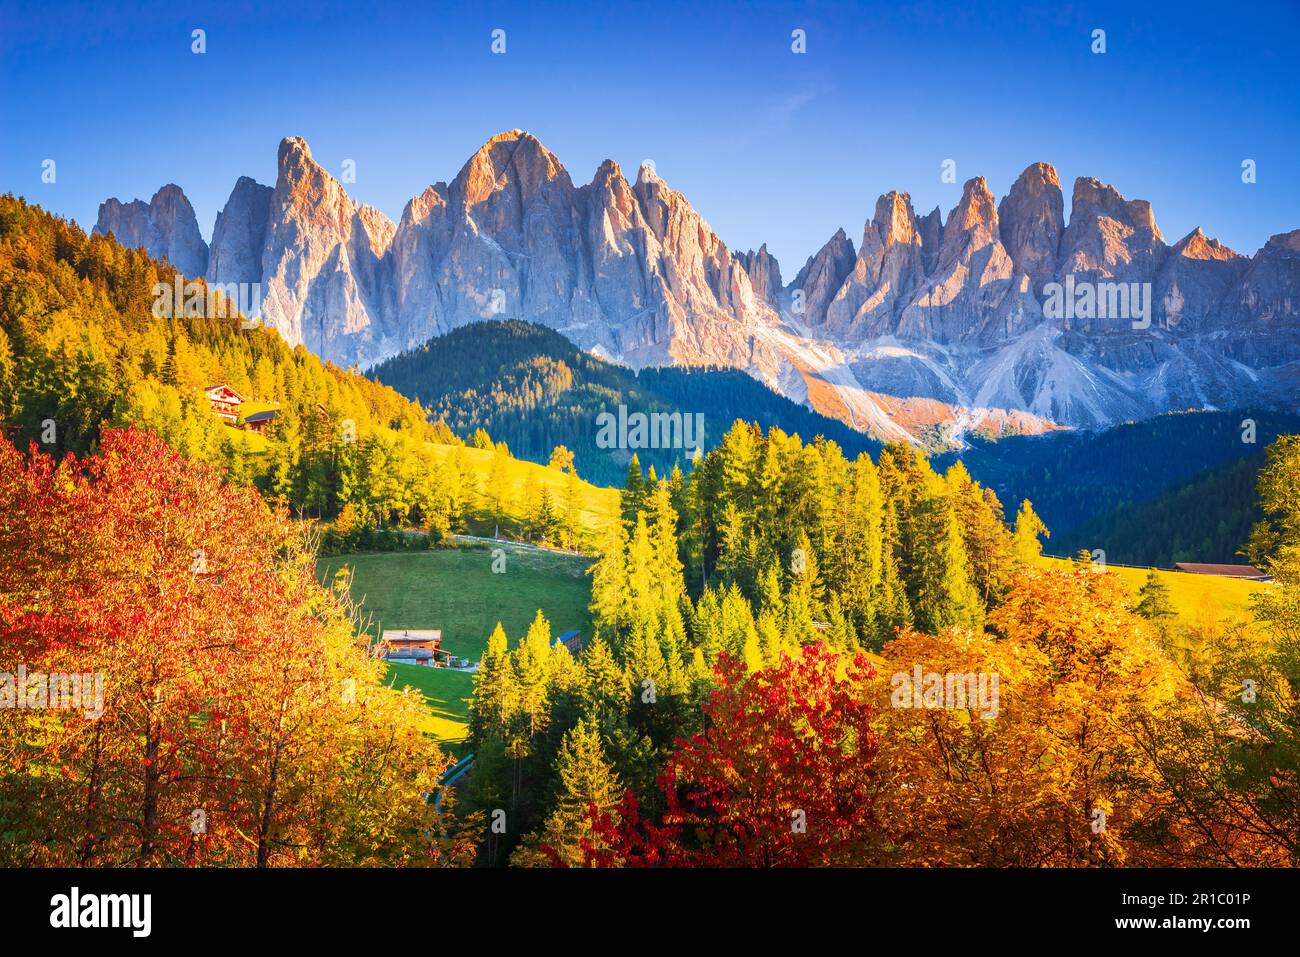 Val di Funes, Italy - Autumn scenic with Santa Magdalena village, idyllic Dolomites landscape in Funes Valley, South Tyrol, Italian Alps spotlight. Stock Photo